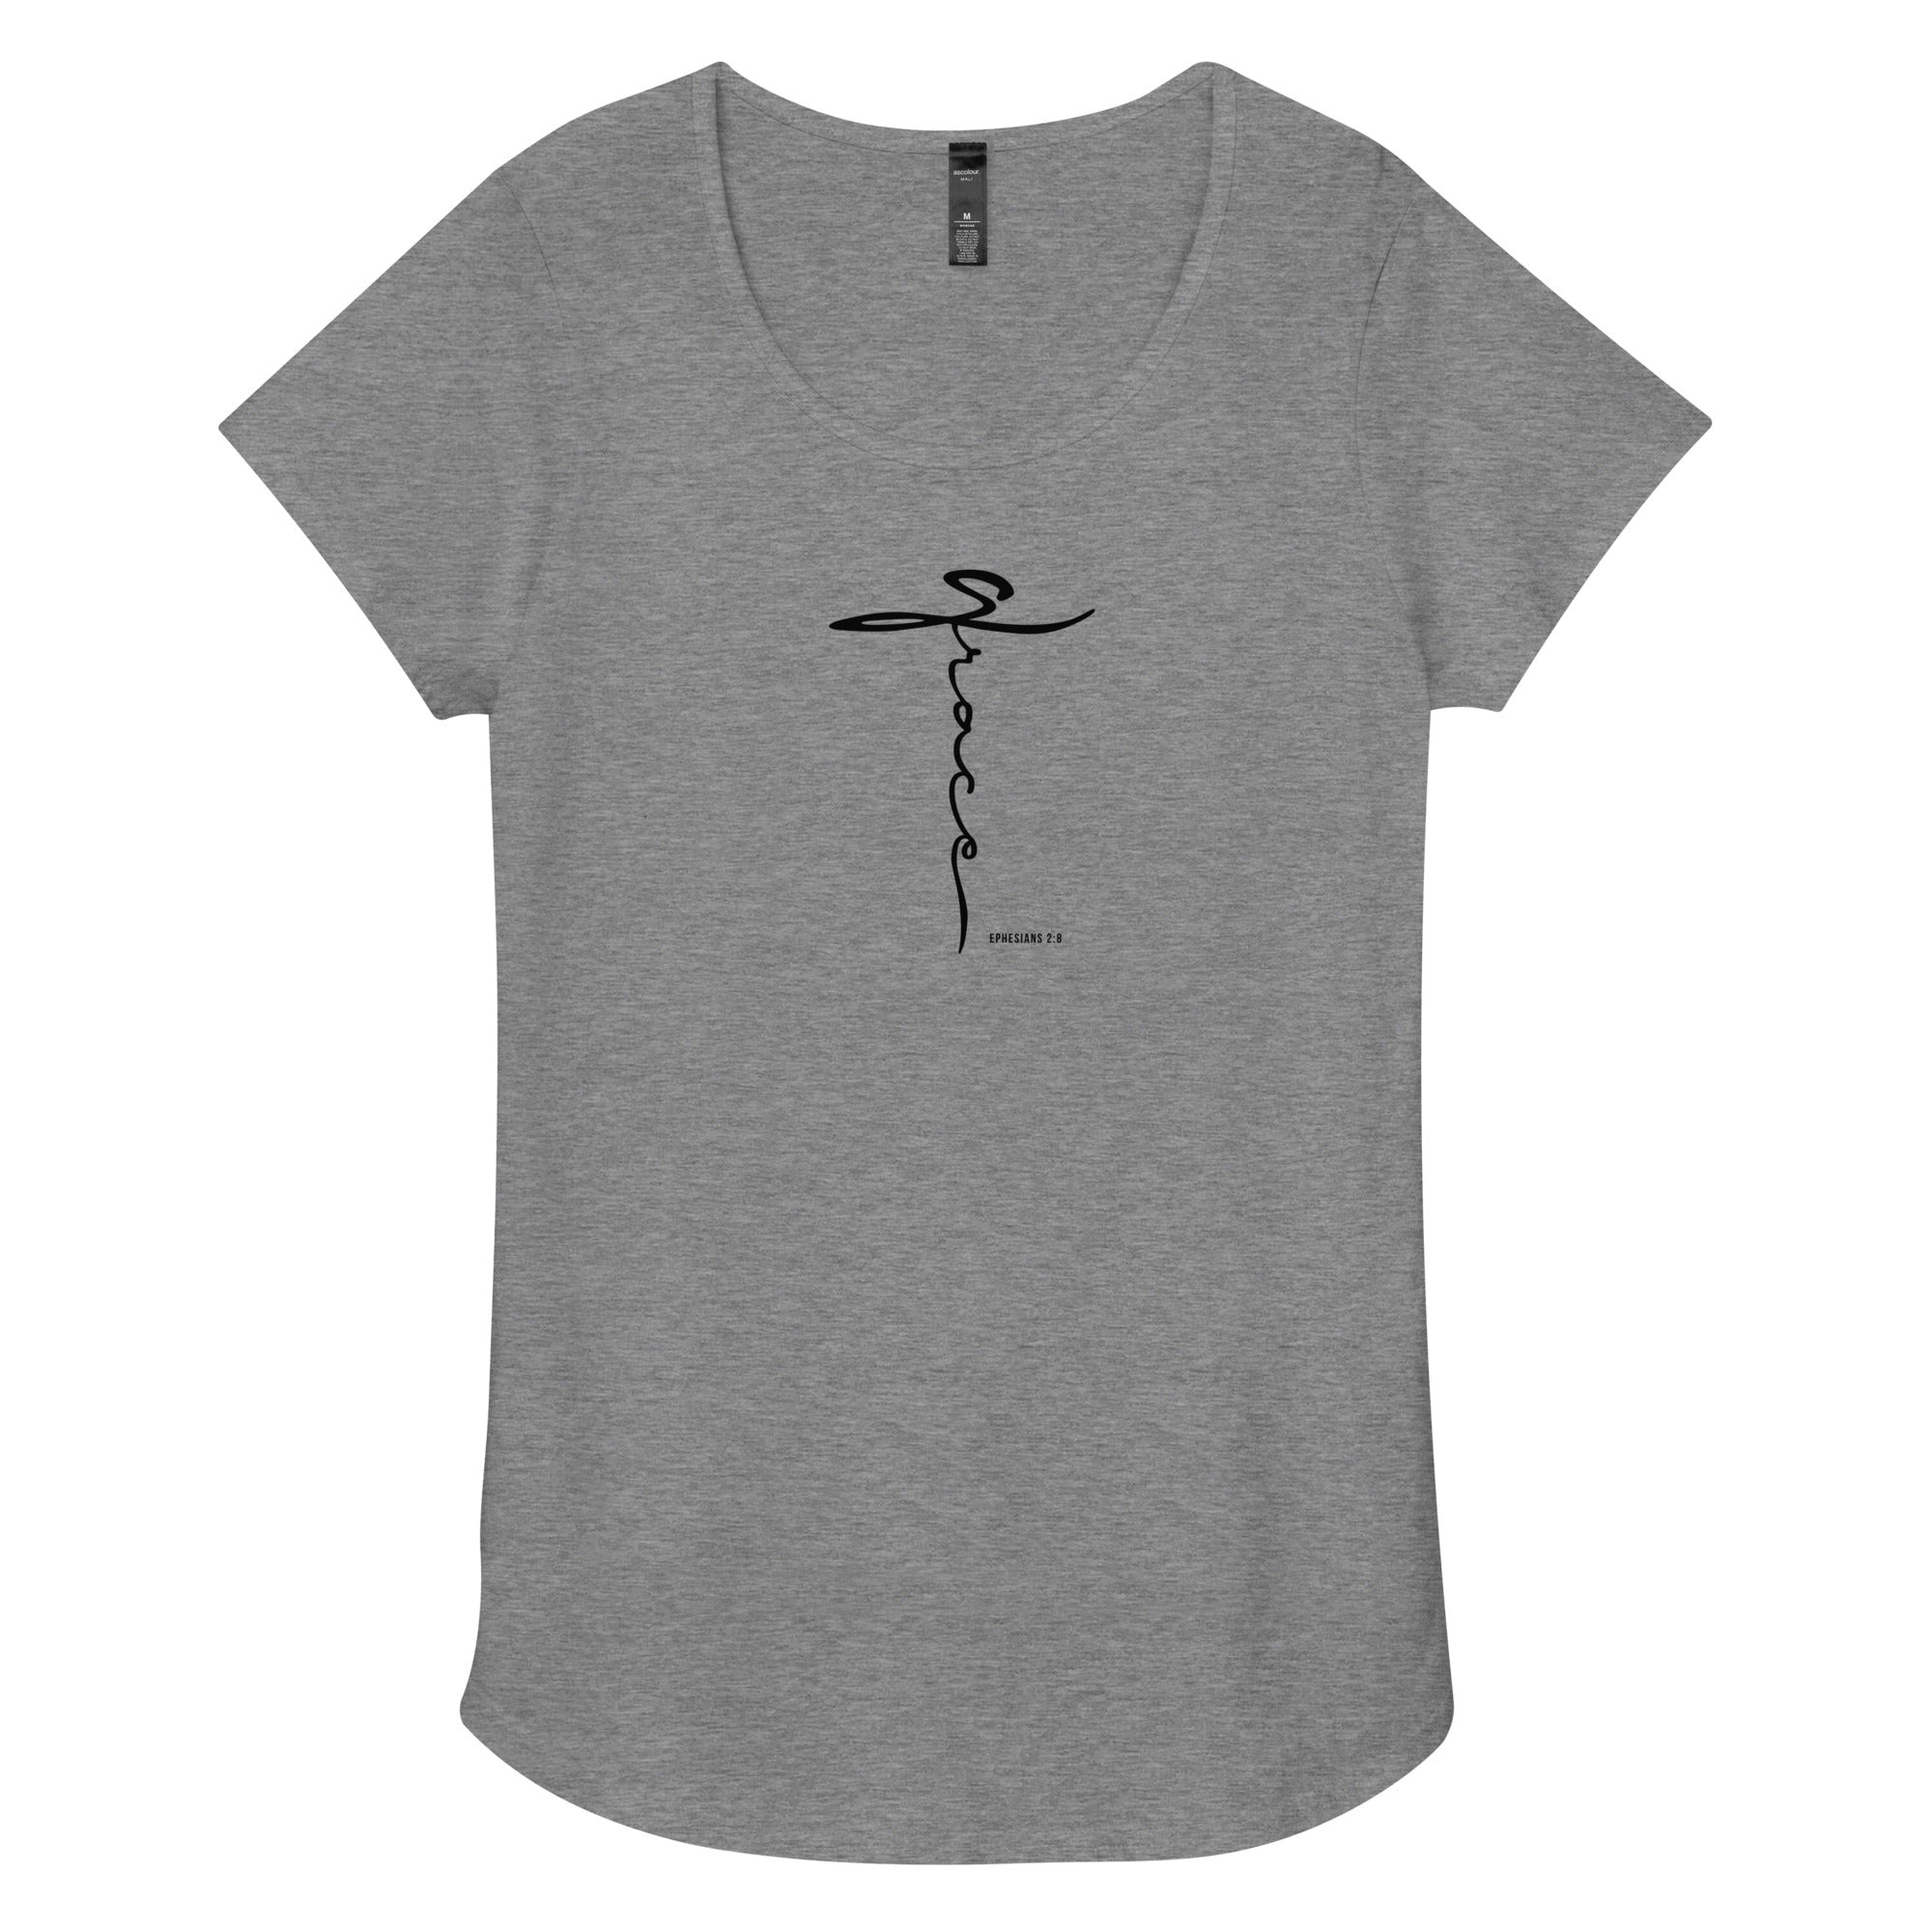 Grace at the Cross t-shirt. Exclusive Design Bestseller Women's T-shirt Scoop Round Neck